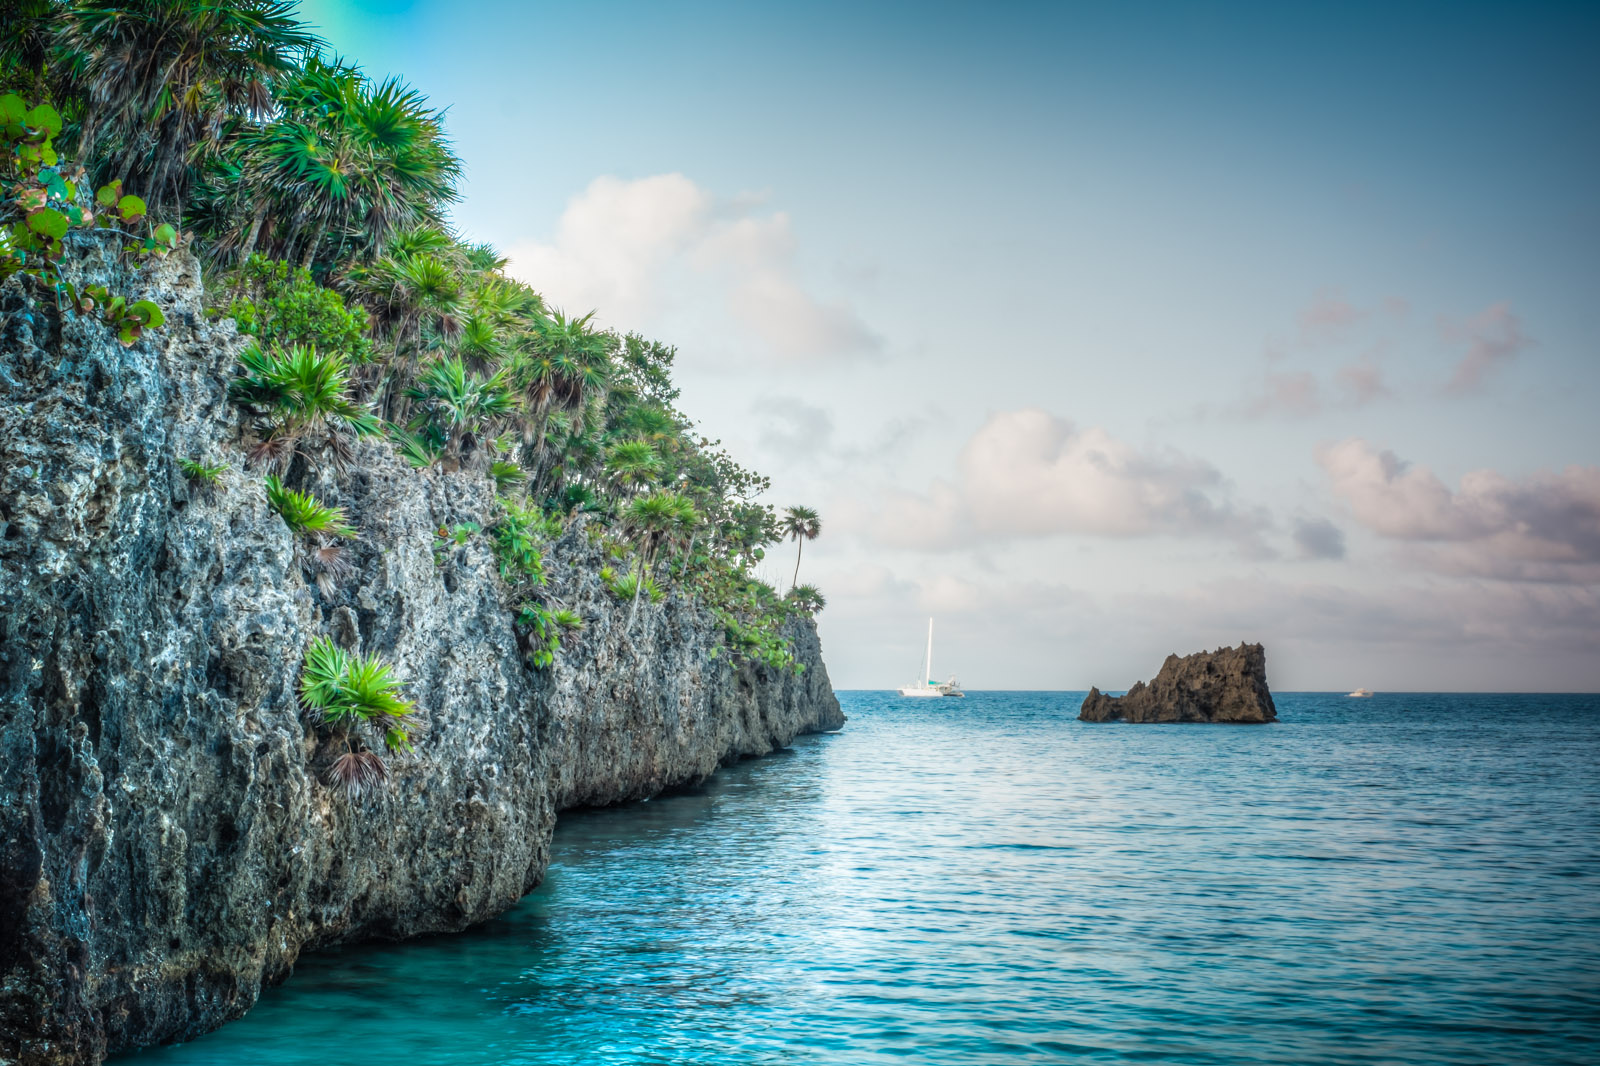 Free download Shooting The Reef In Roatan Honduras At Sunrise The Traveling Image [1600x1066] for your Desktop, Mobile & Tablet. Explore Roatan Wallpaper